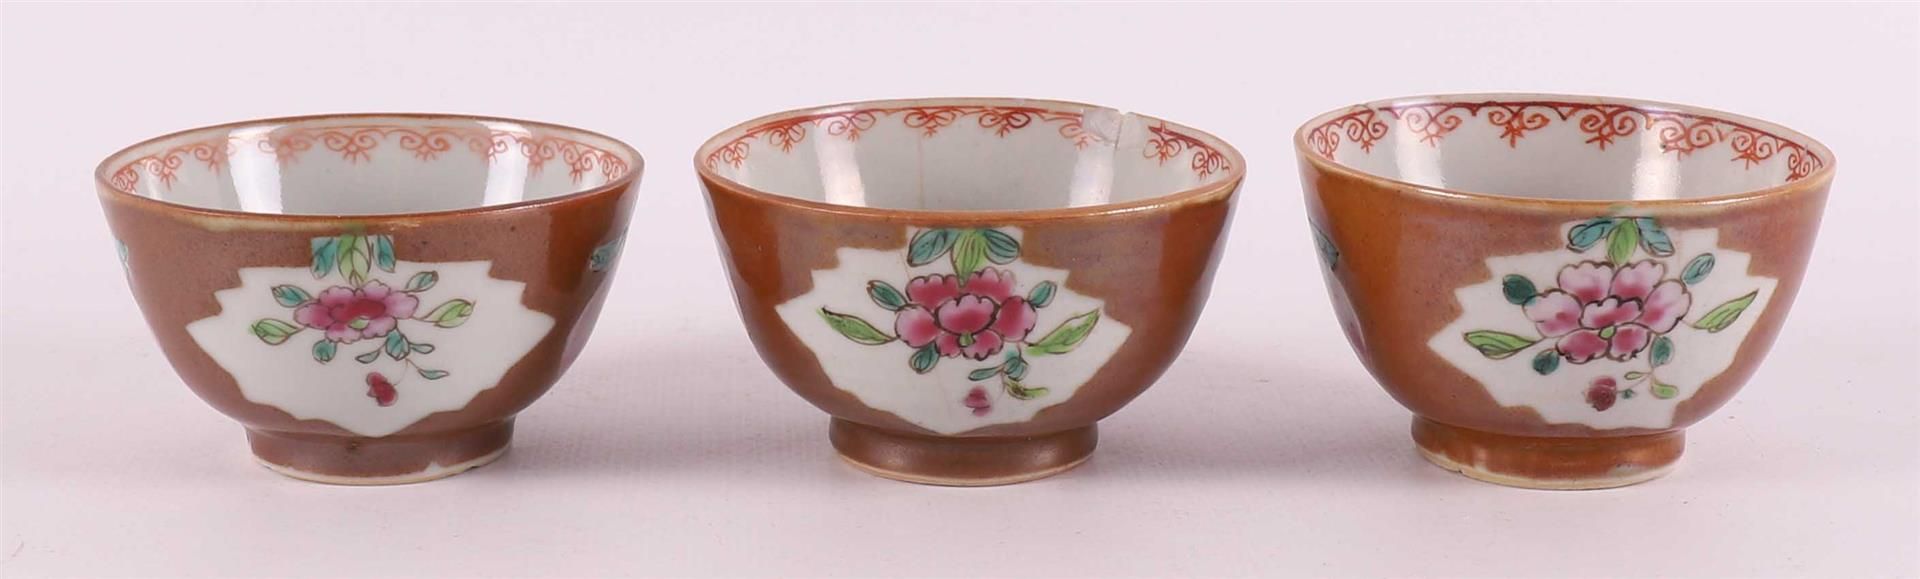 Seven famille rose porcelain cups and saucers, Batavia porcelain, China, - Image 16 of 27